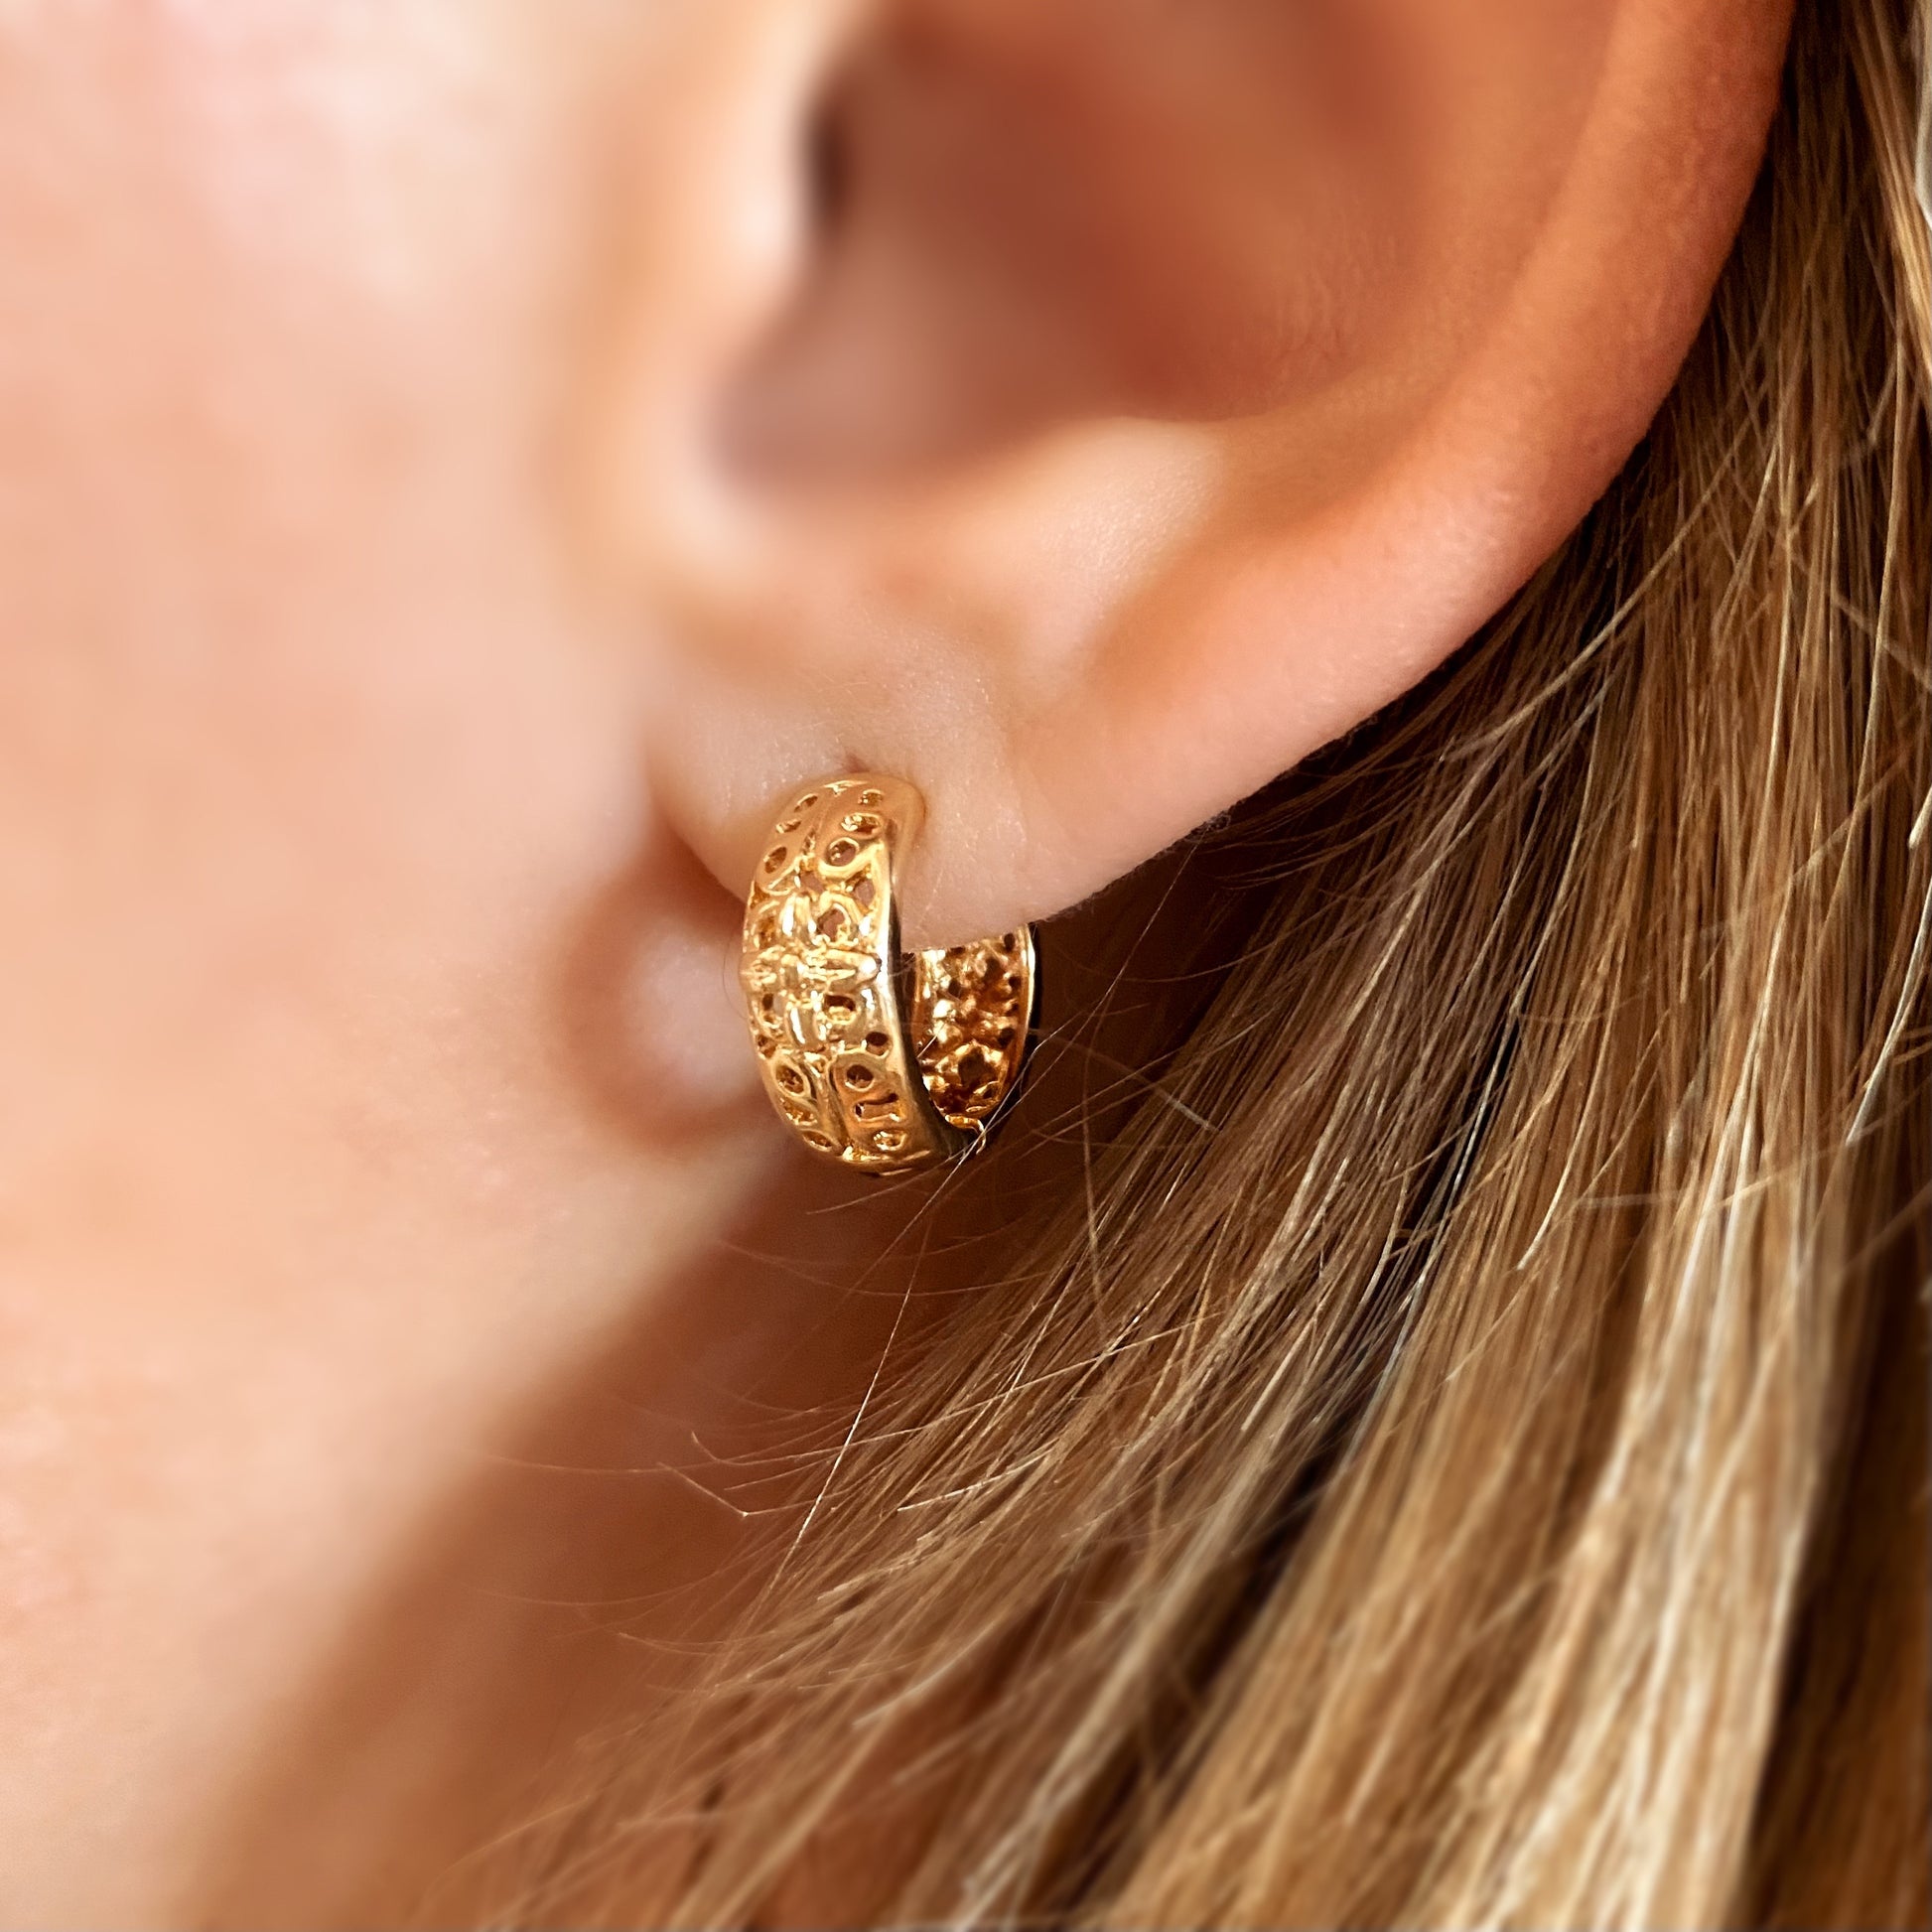 GoldFi 18k Gold Filled Vintage Flower Clicker Hoop Earrings